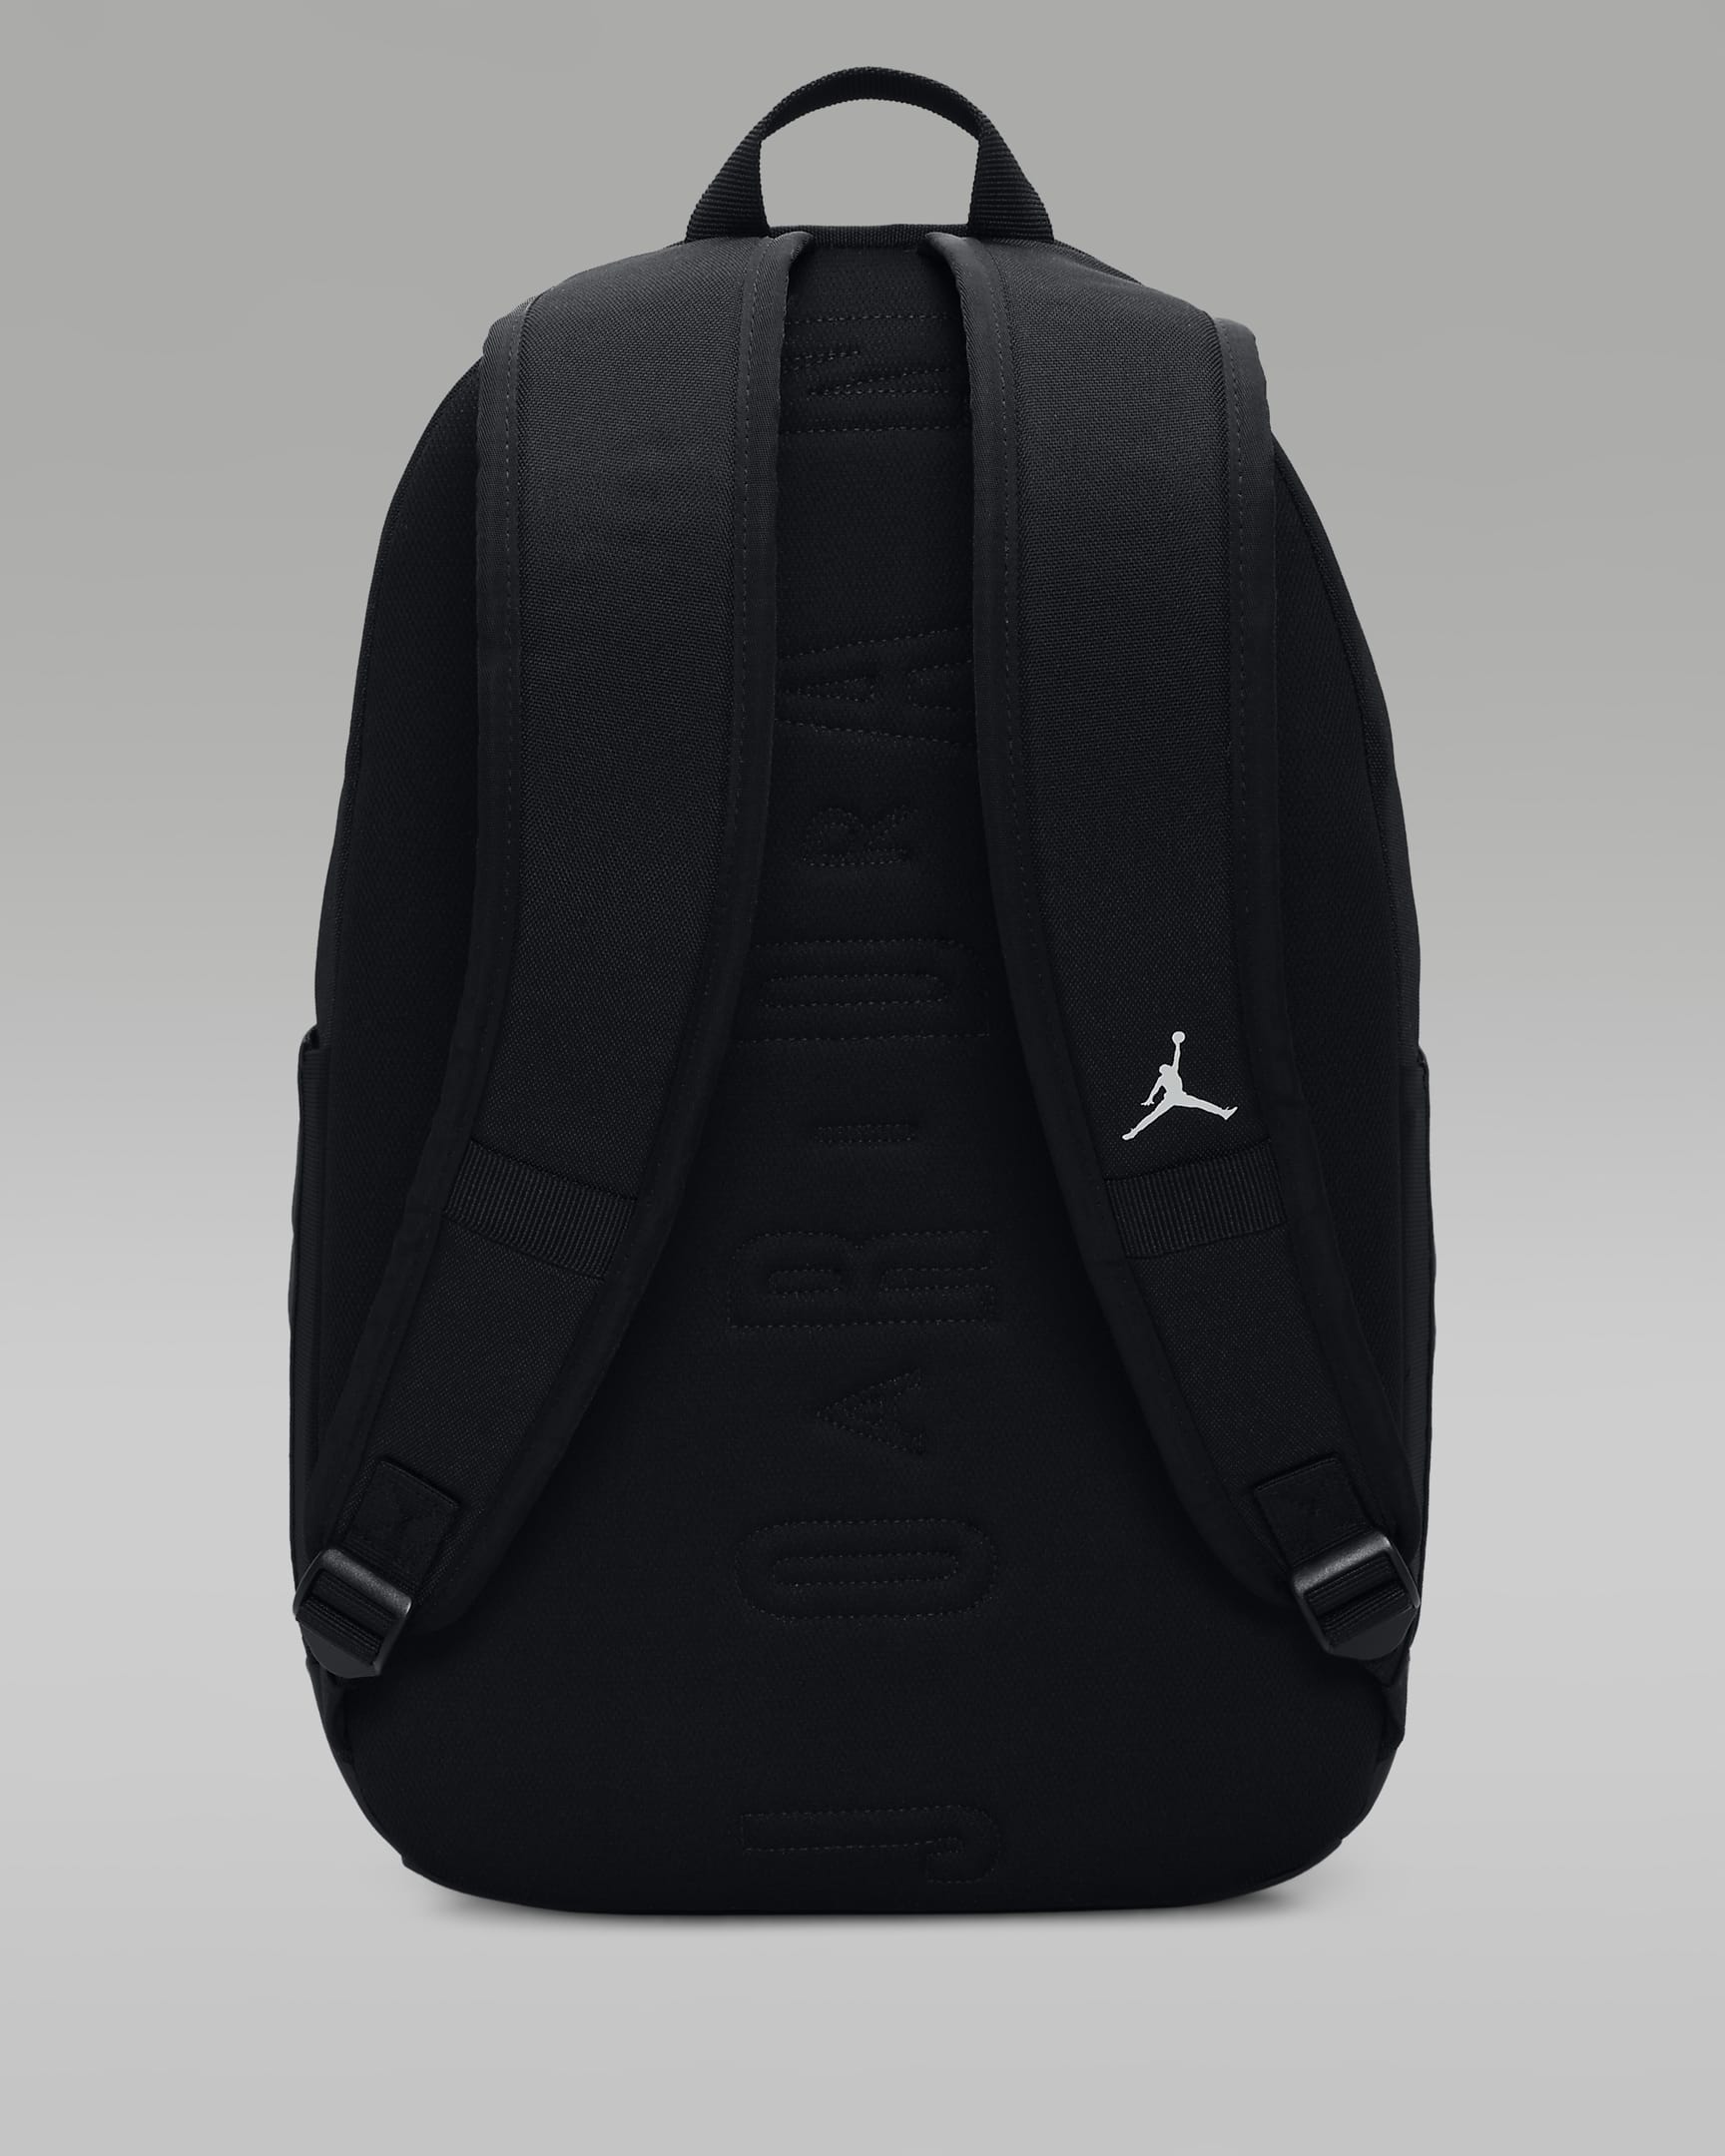 Mochila Jordan (grande). Nike.com